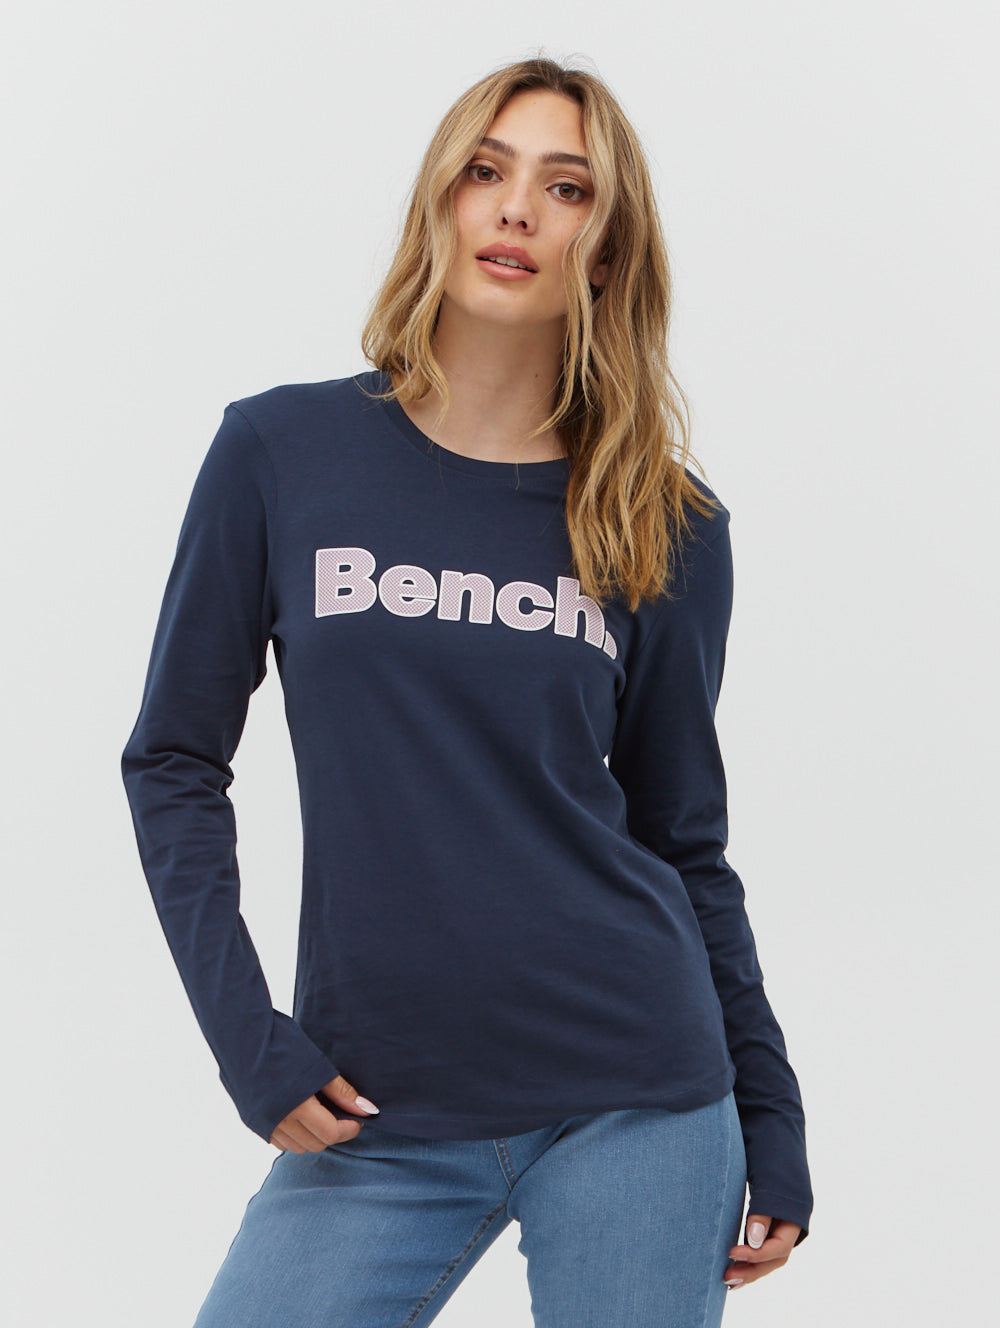 Jewelle Long Sleeve - Bench Logo Tee - BN4A124730